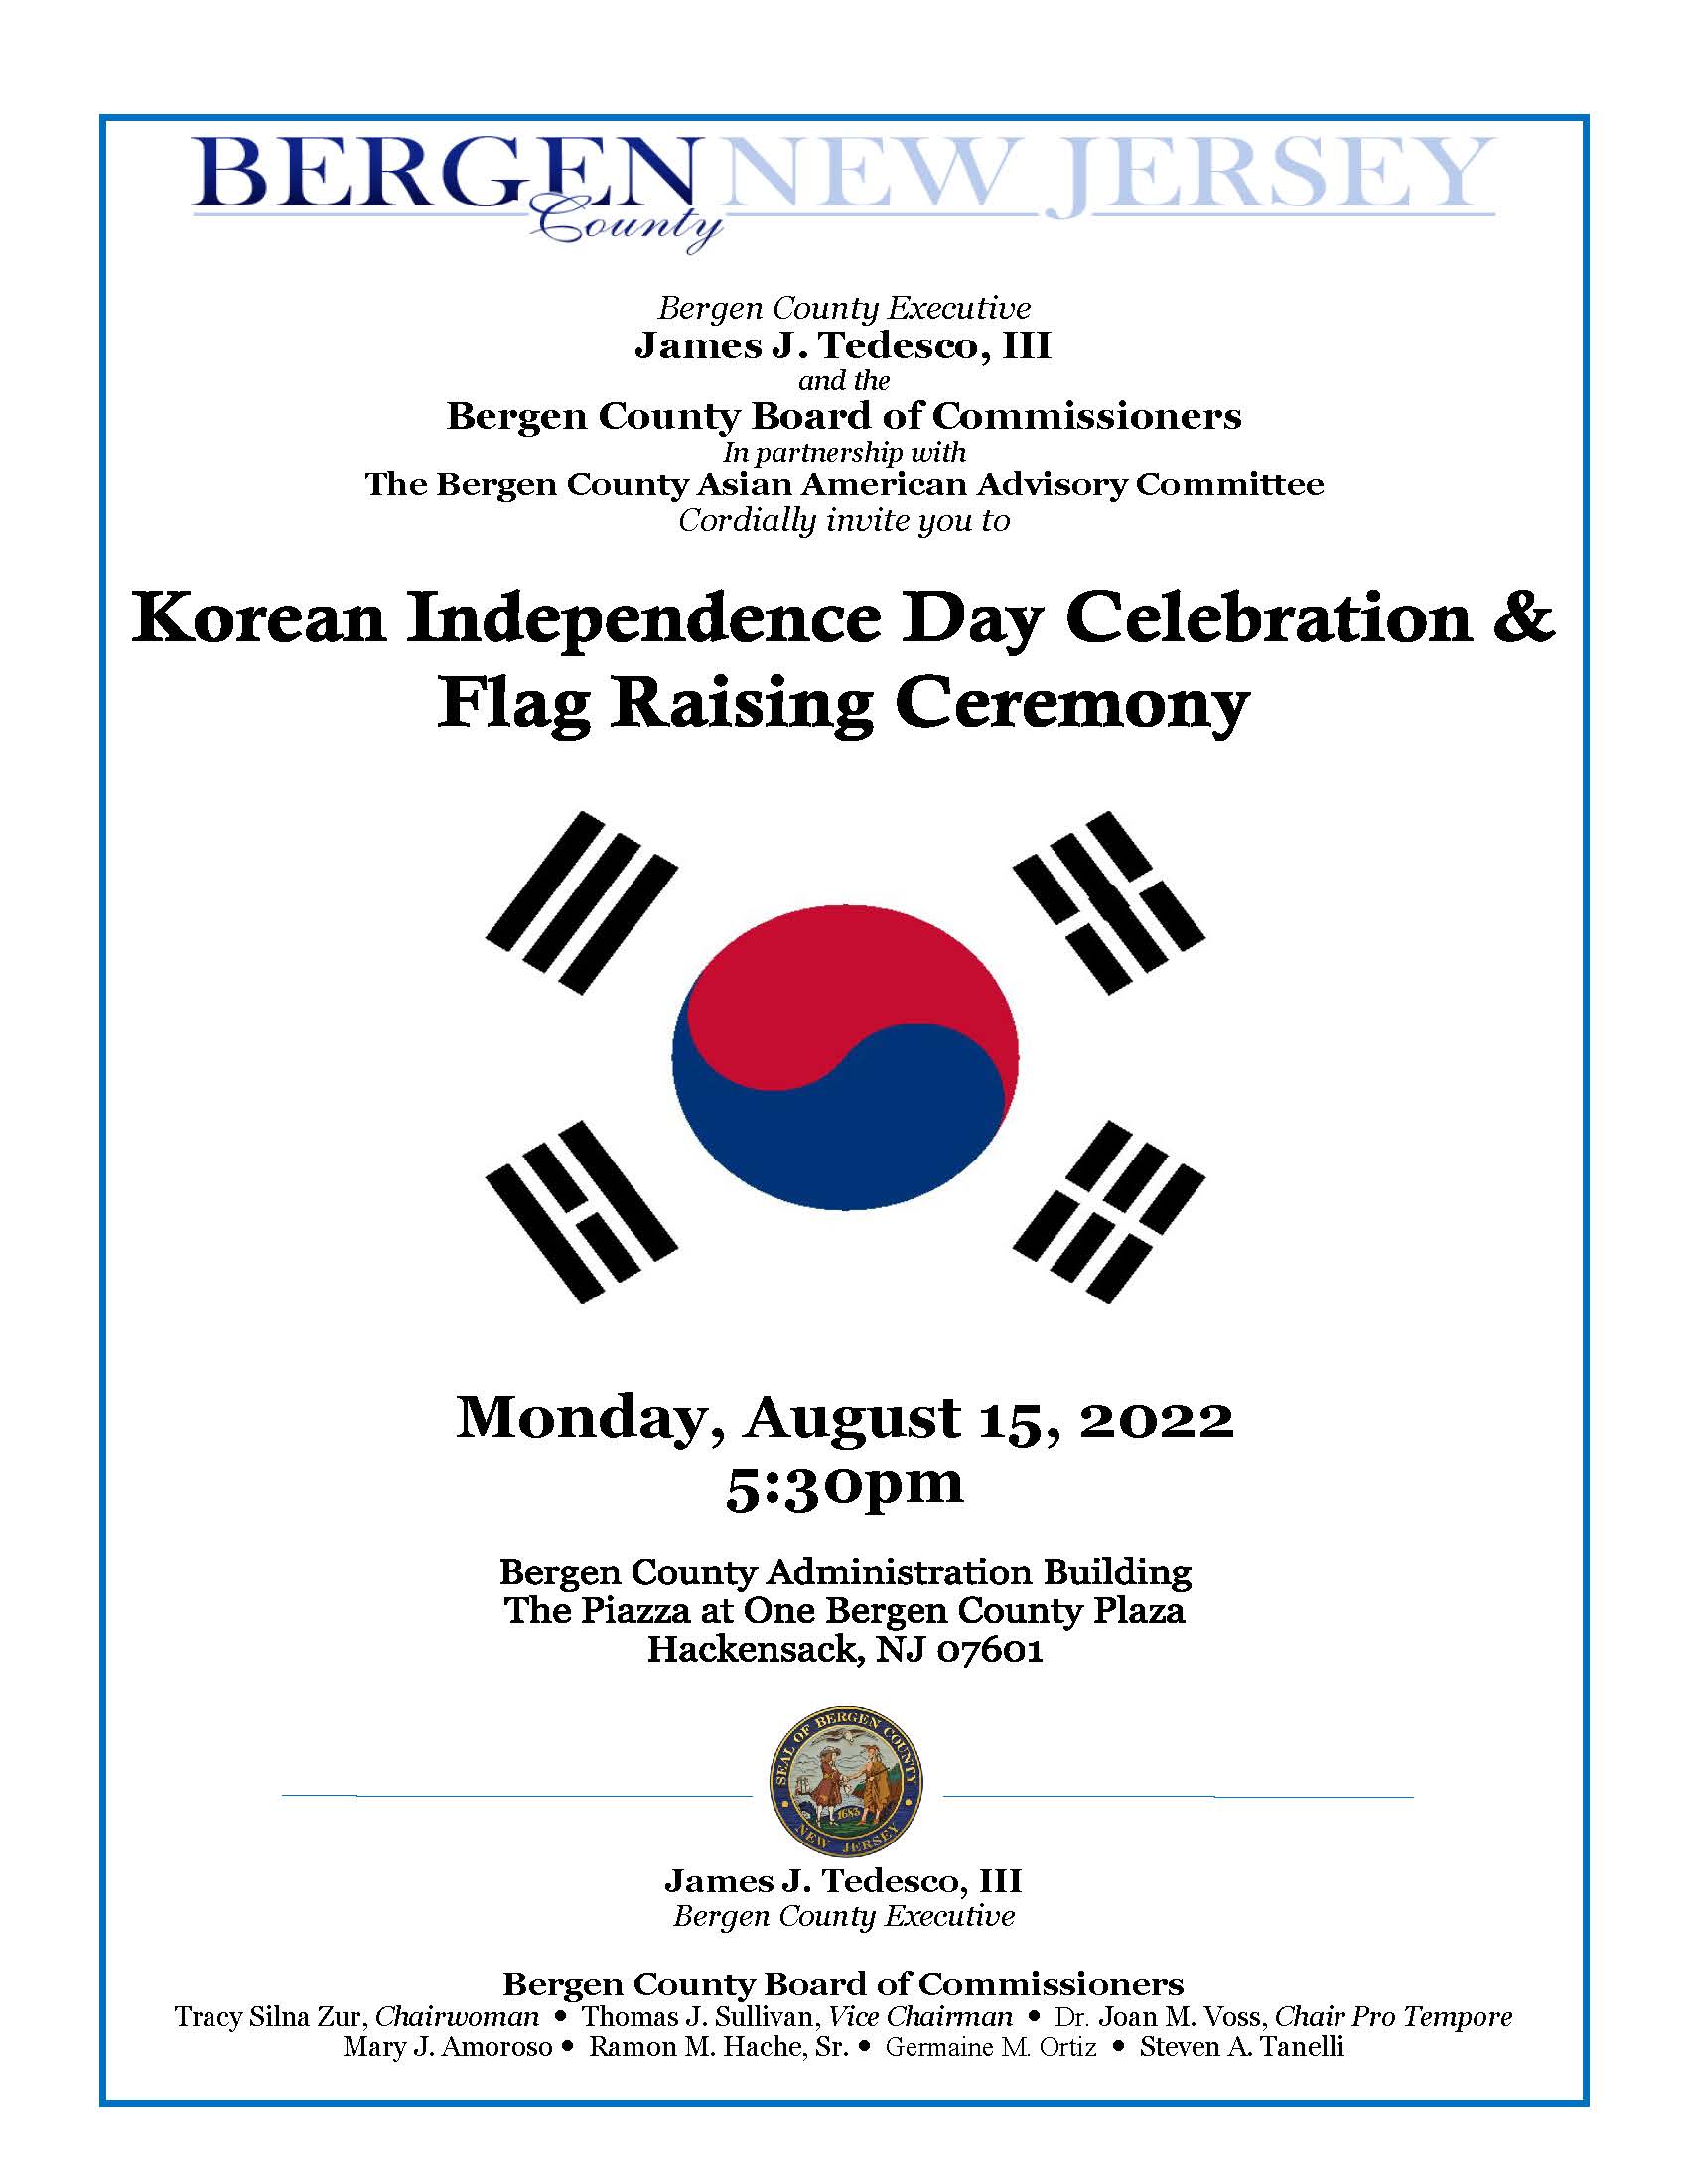 2022 korean independence day flag raising ceremony